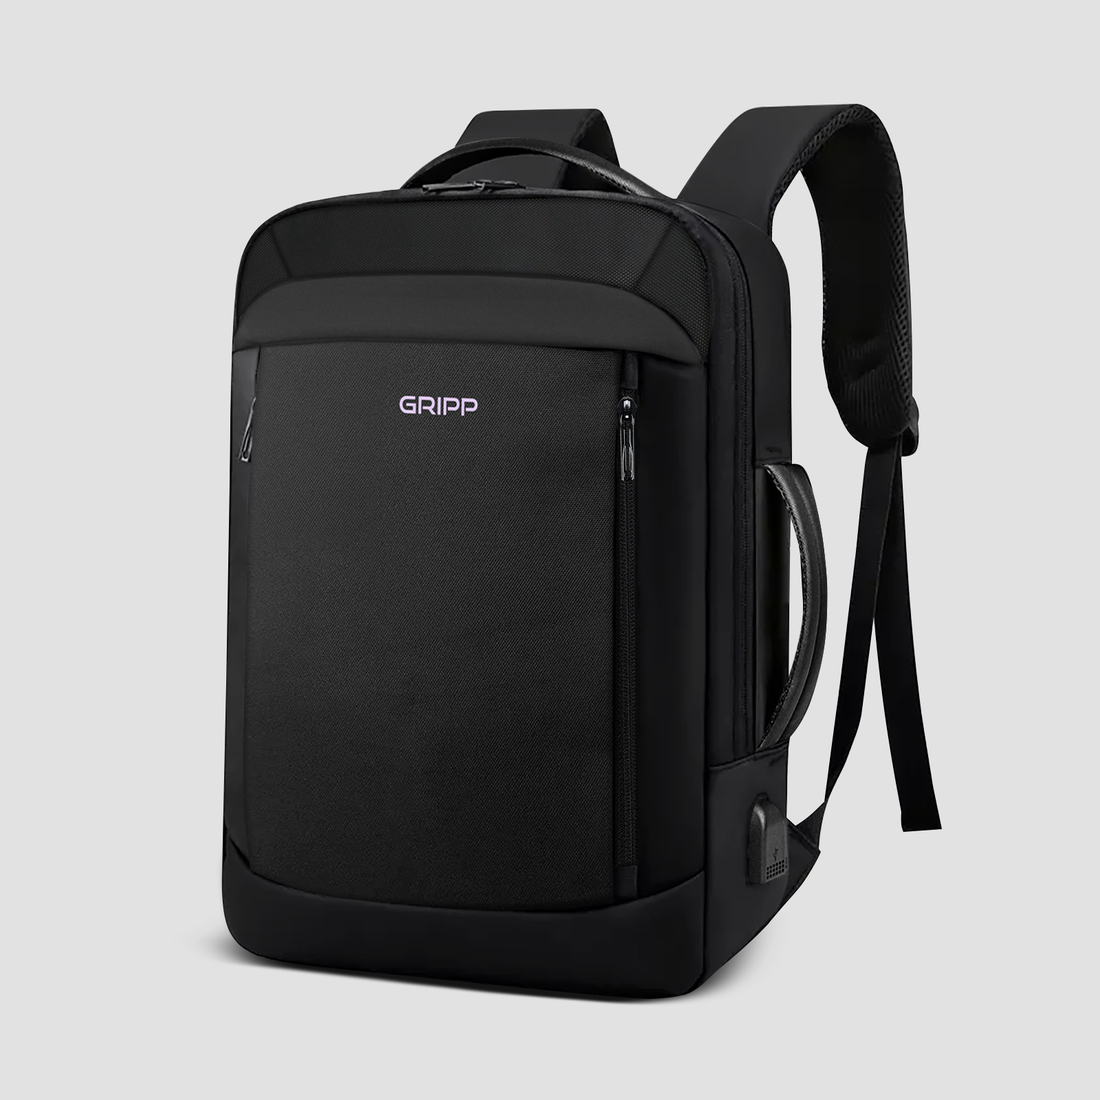 GRIPP Trans Backpack upto 15" for Laptop/MacBook - Black